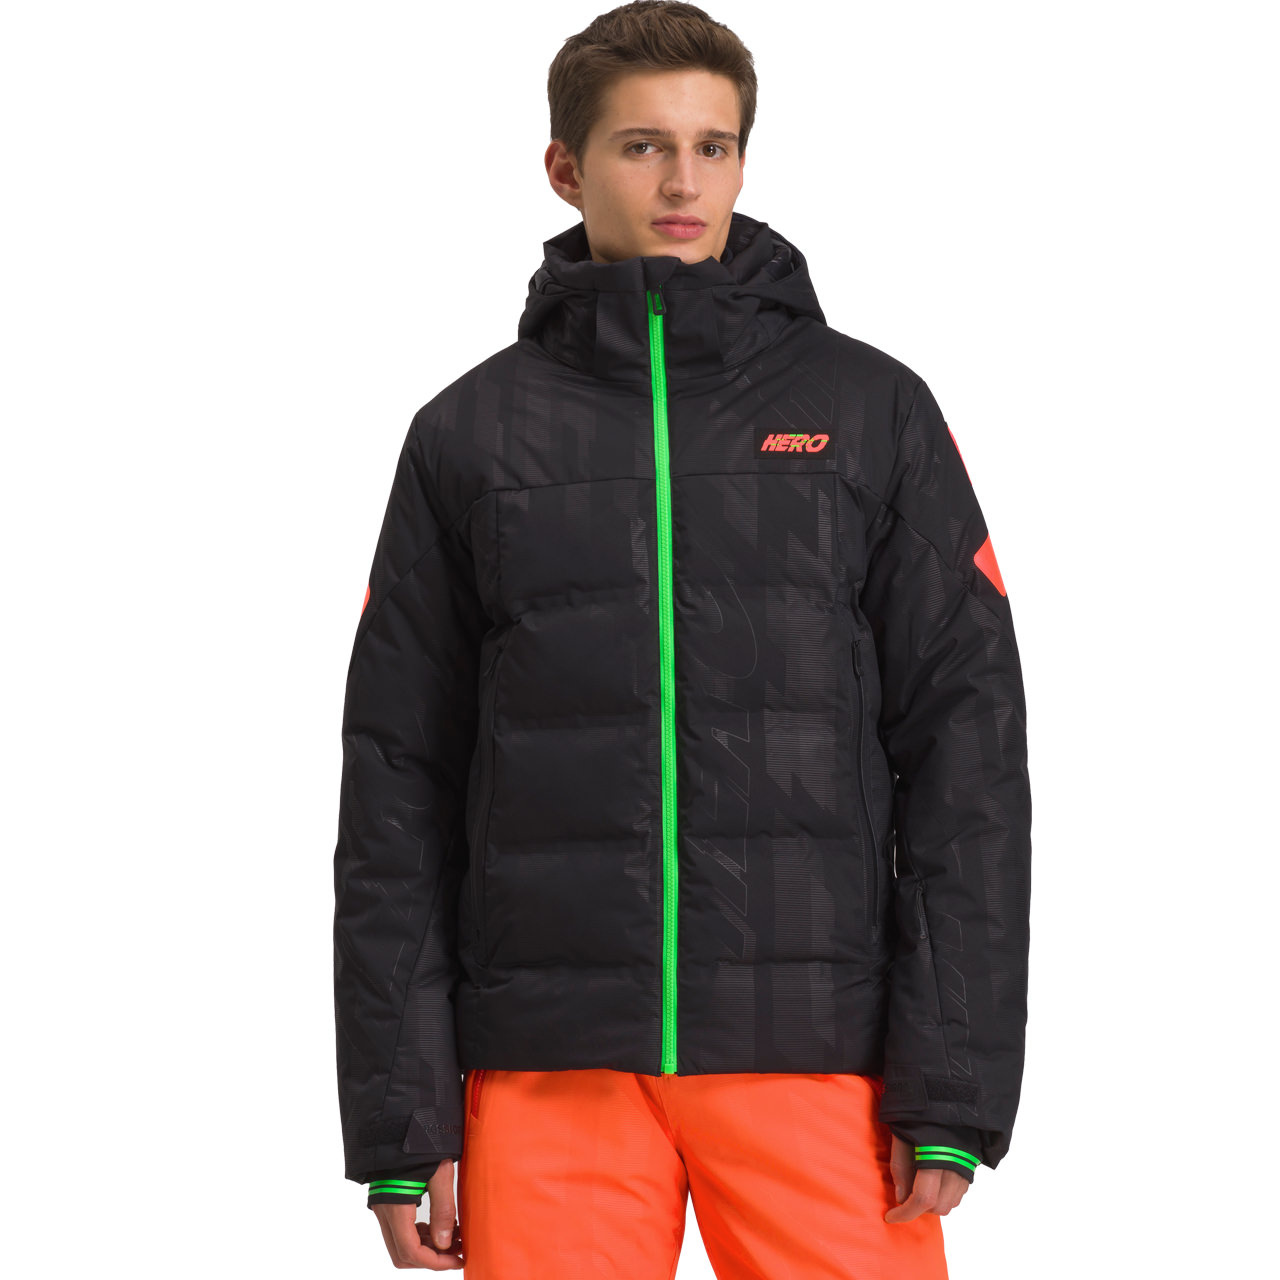 Rossignol Skiwear Herren Skijacke HERO DEPART black